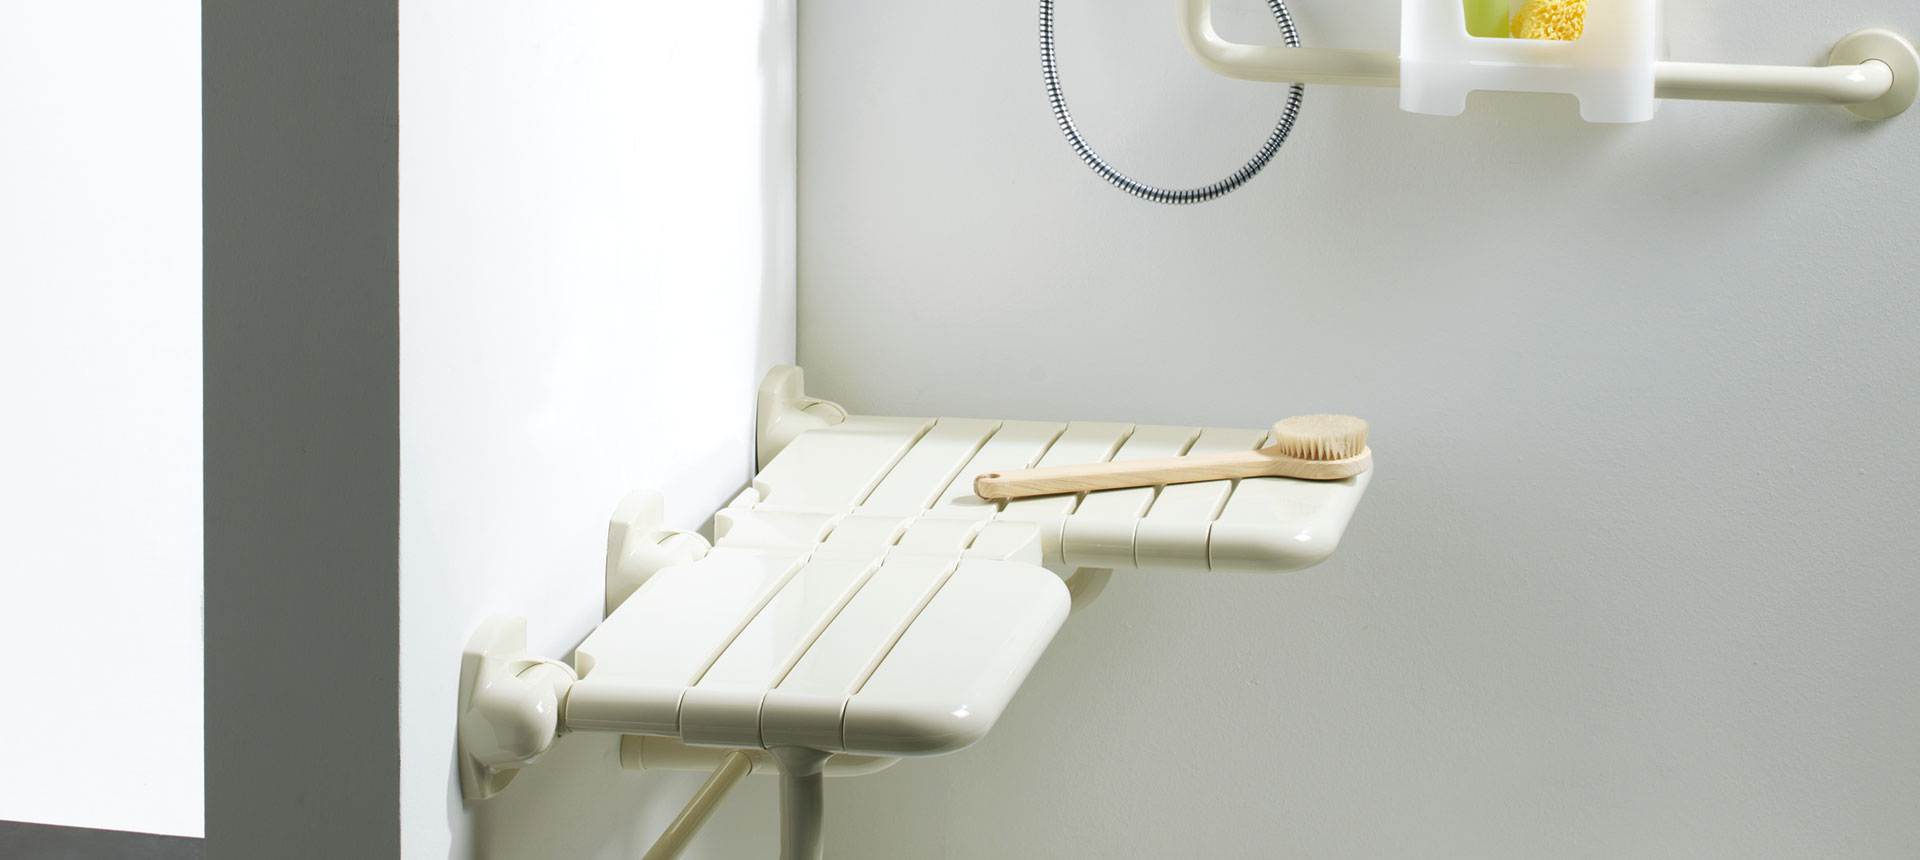 L-shaped shower folding seat